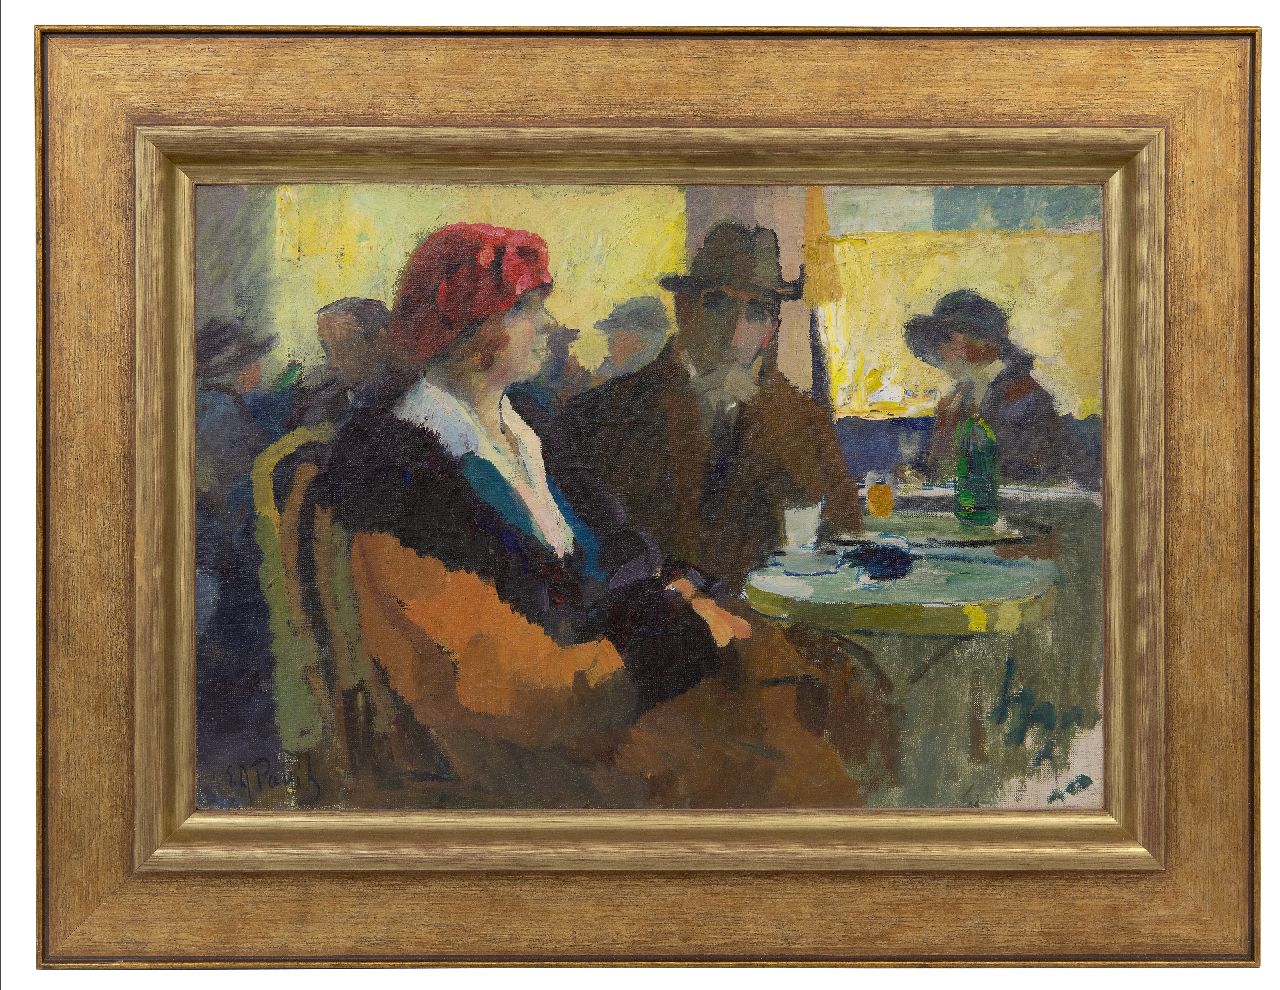 Pavil E.A.  | 'Elie' Anatole Pavil | Schilderijen te koop aangeboden | Au café, olieverf op doek 38,3 x 55,4 cm, gesigneerd linksonder